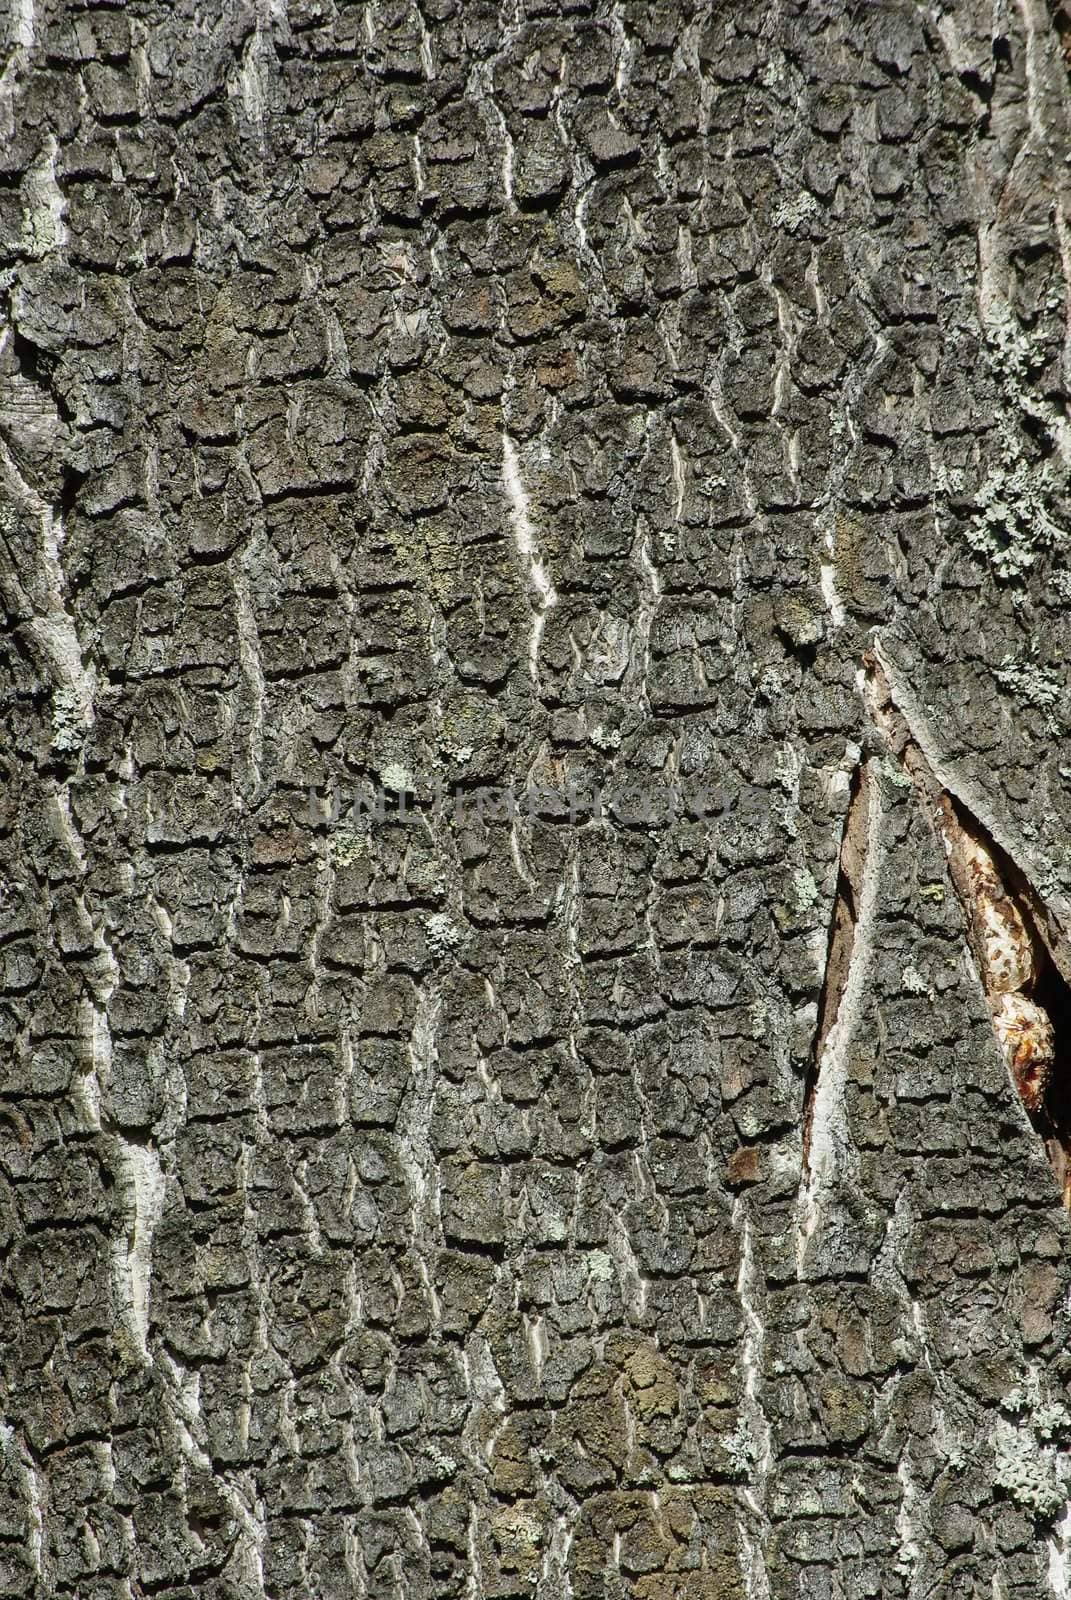 Old aged birch tree bark texture background